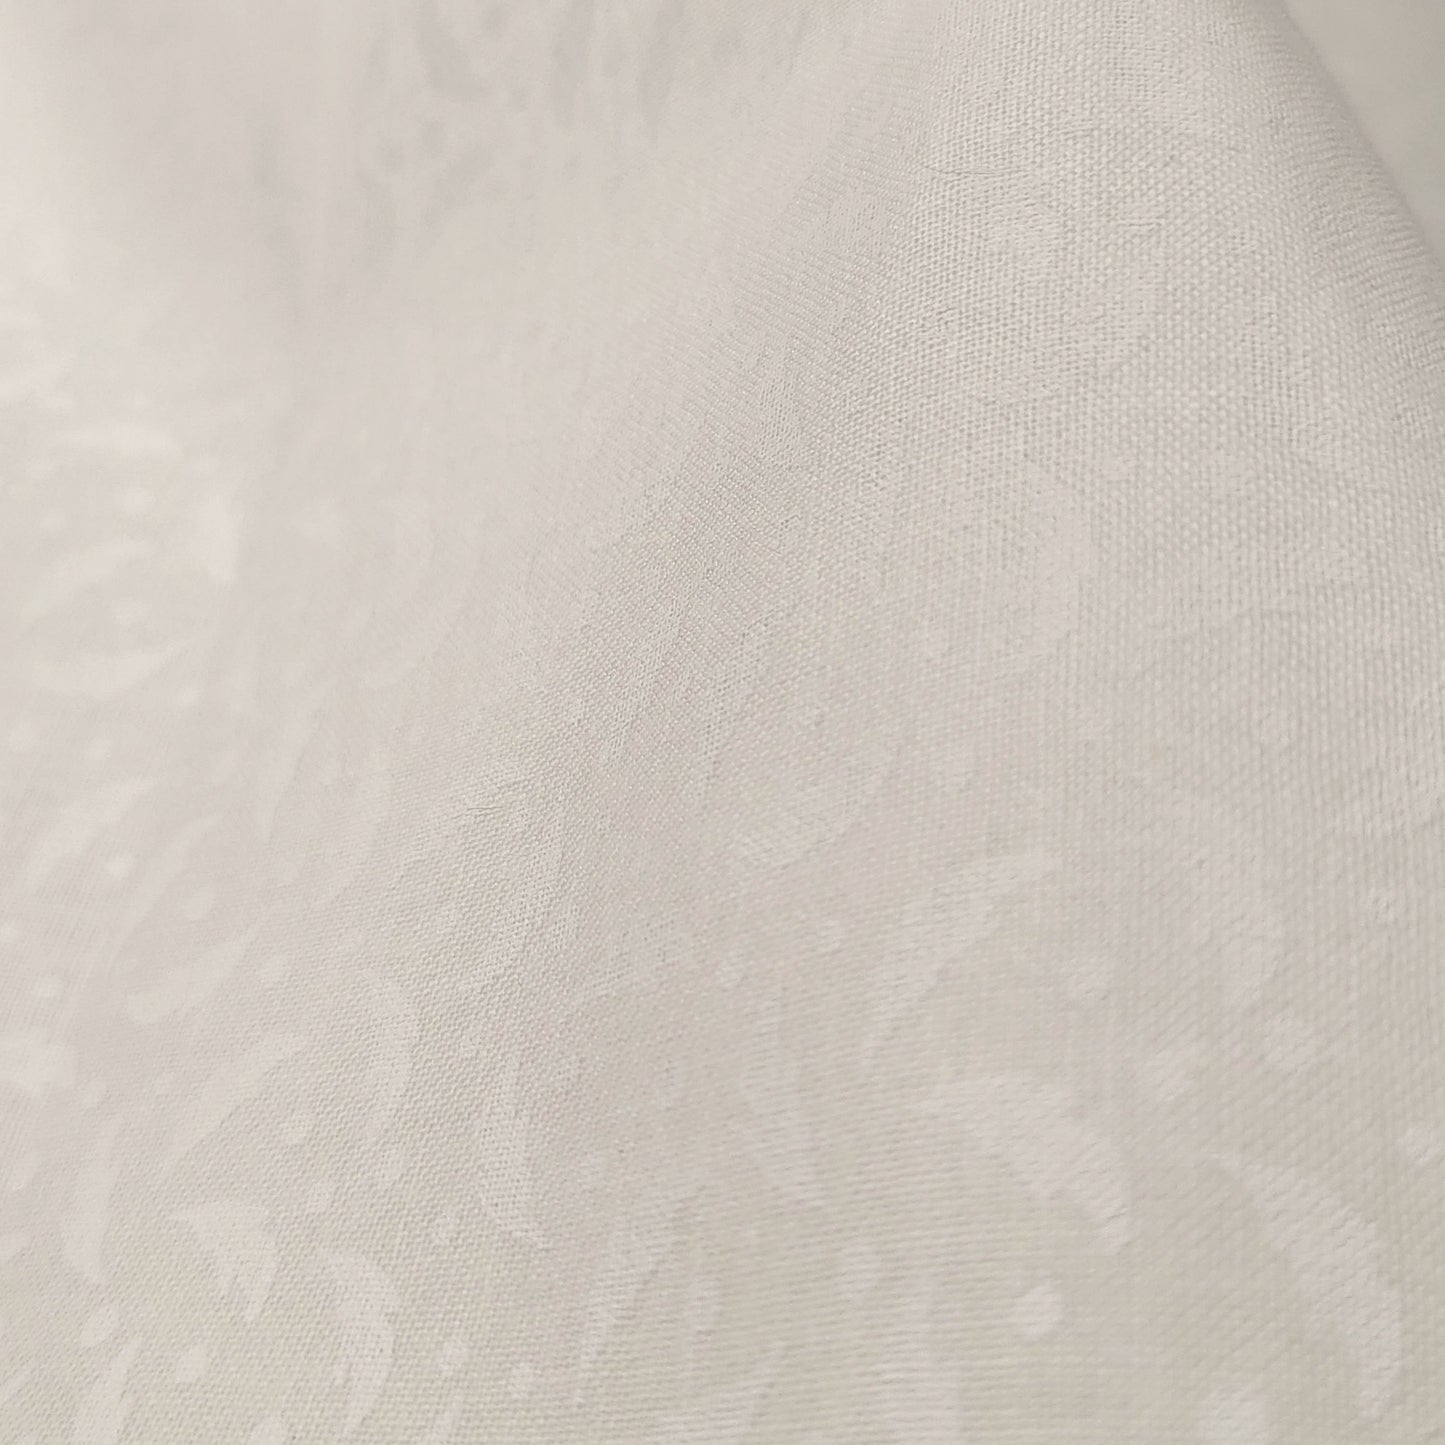 Harmony Prints - White on White - 1250-117 in Floral - Full Bolt (15m)